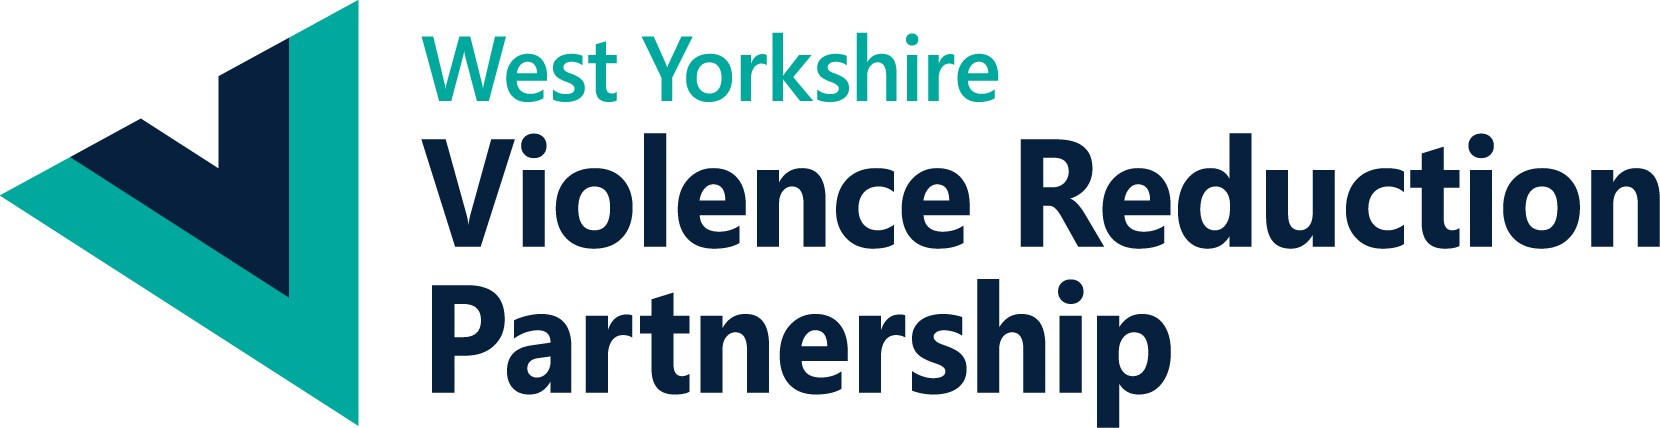 Violence Reduction Partnership - VRP